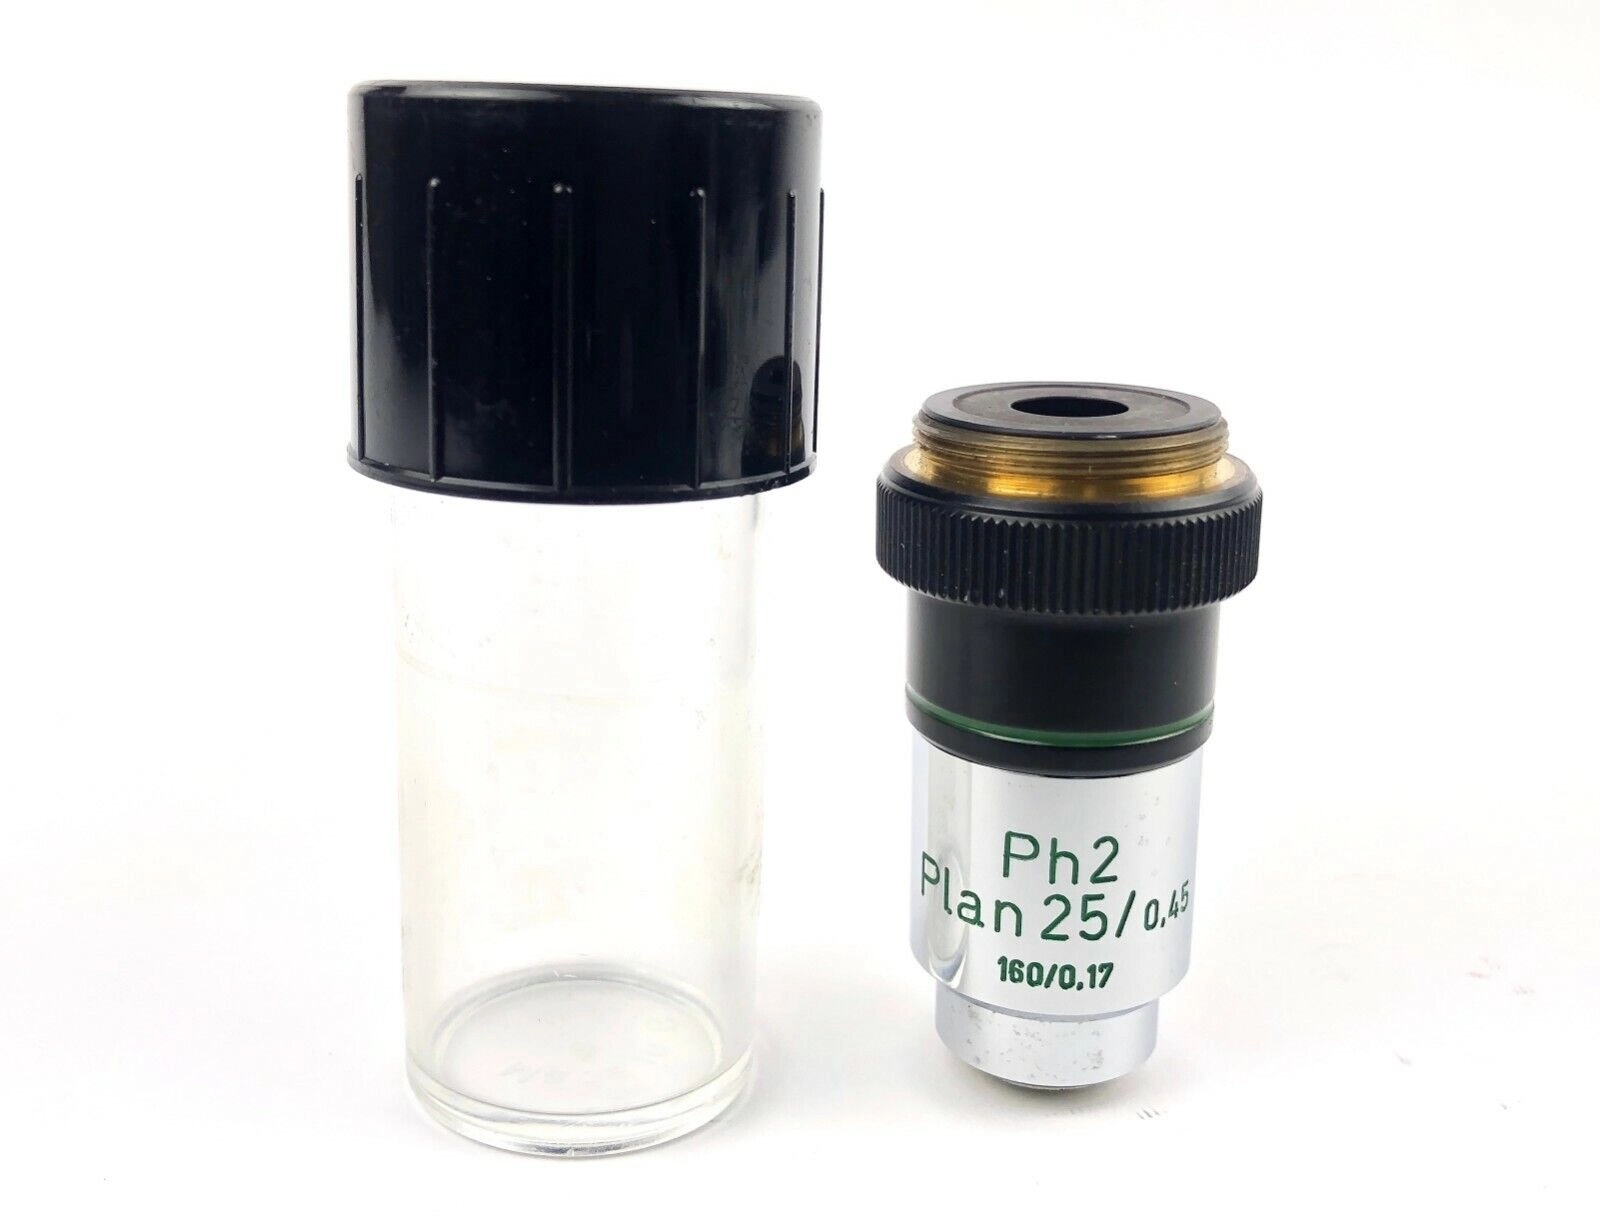 Carl Zeiss Microscope Objective Ph2 Plan 25x, 0.45